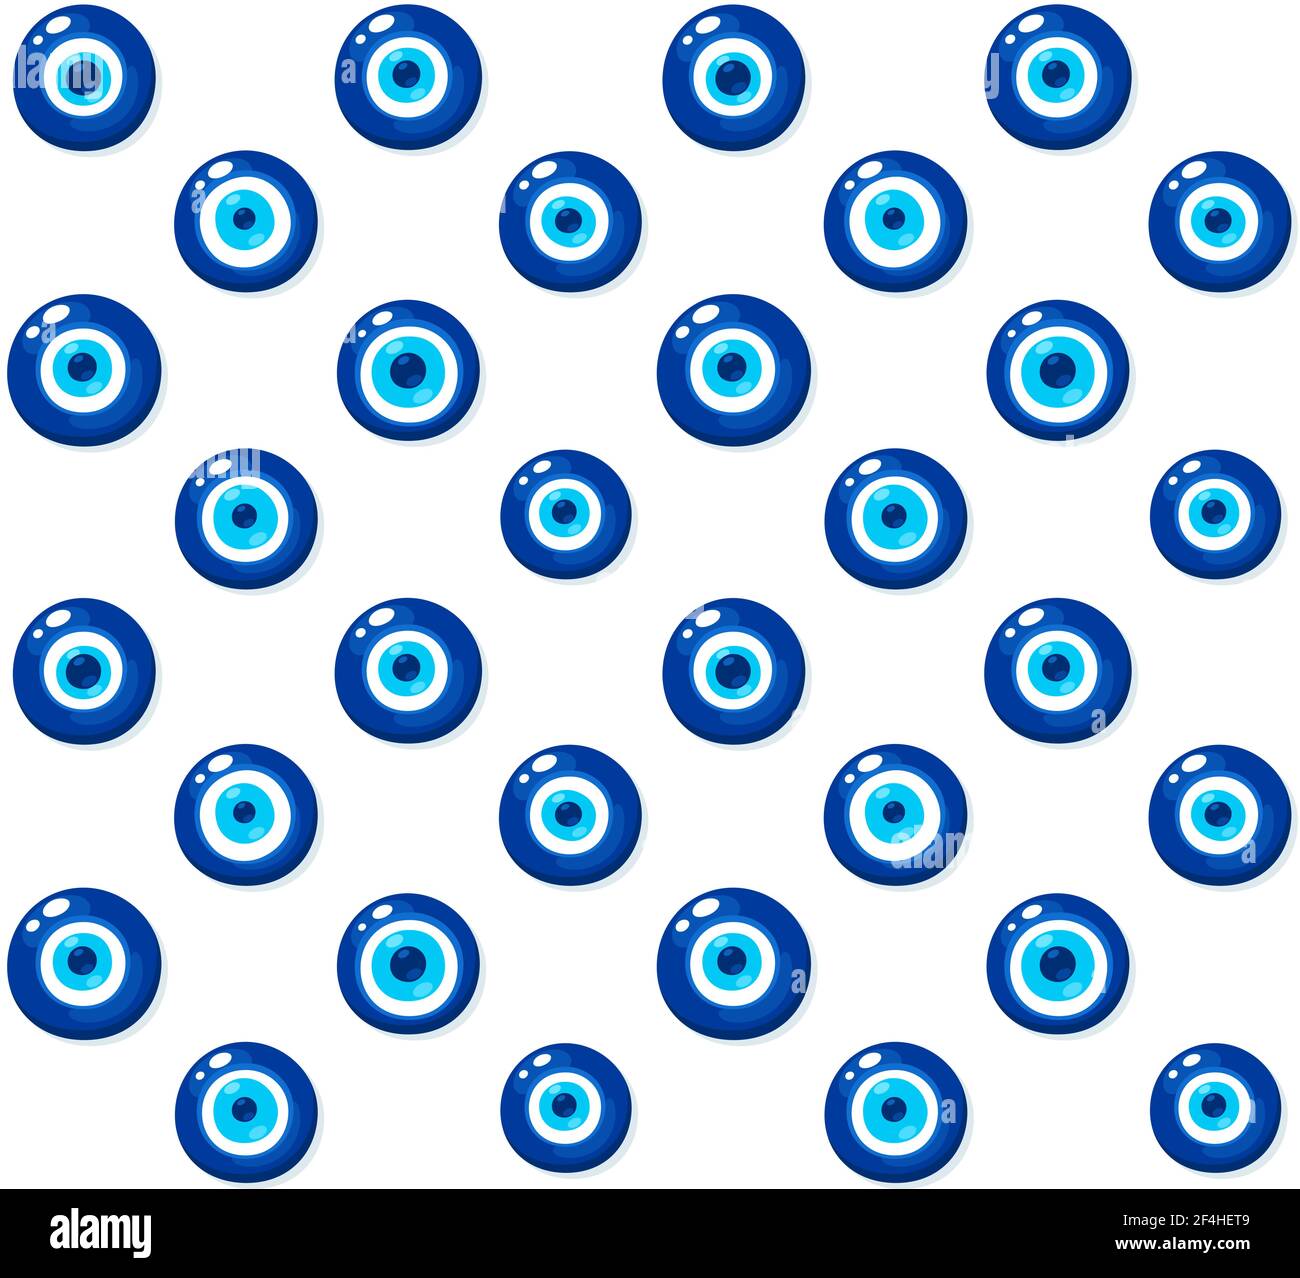 Nazar Boncugu, Turkish Evil Eye. Blue glass eye seamless pattern. Vector art background texture illustration. Stock Vector